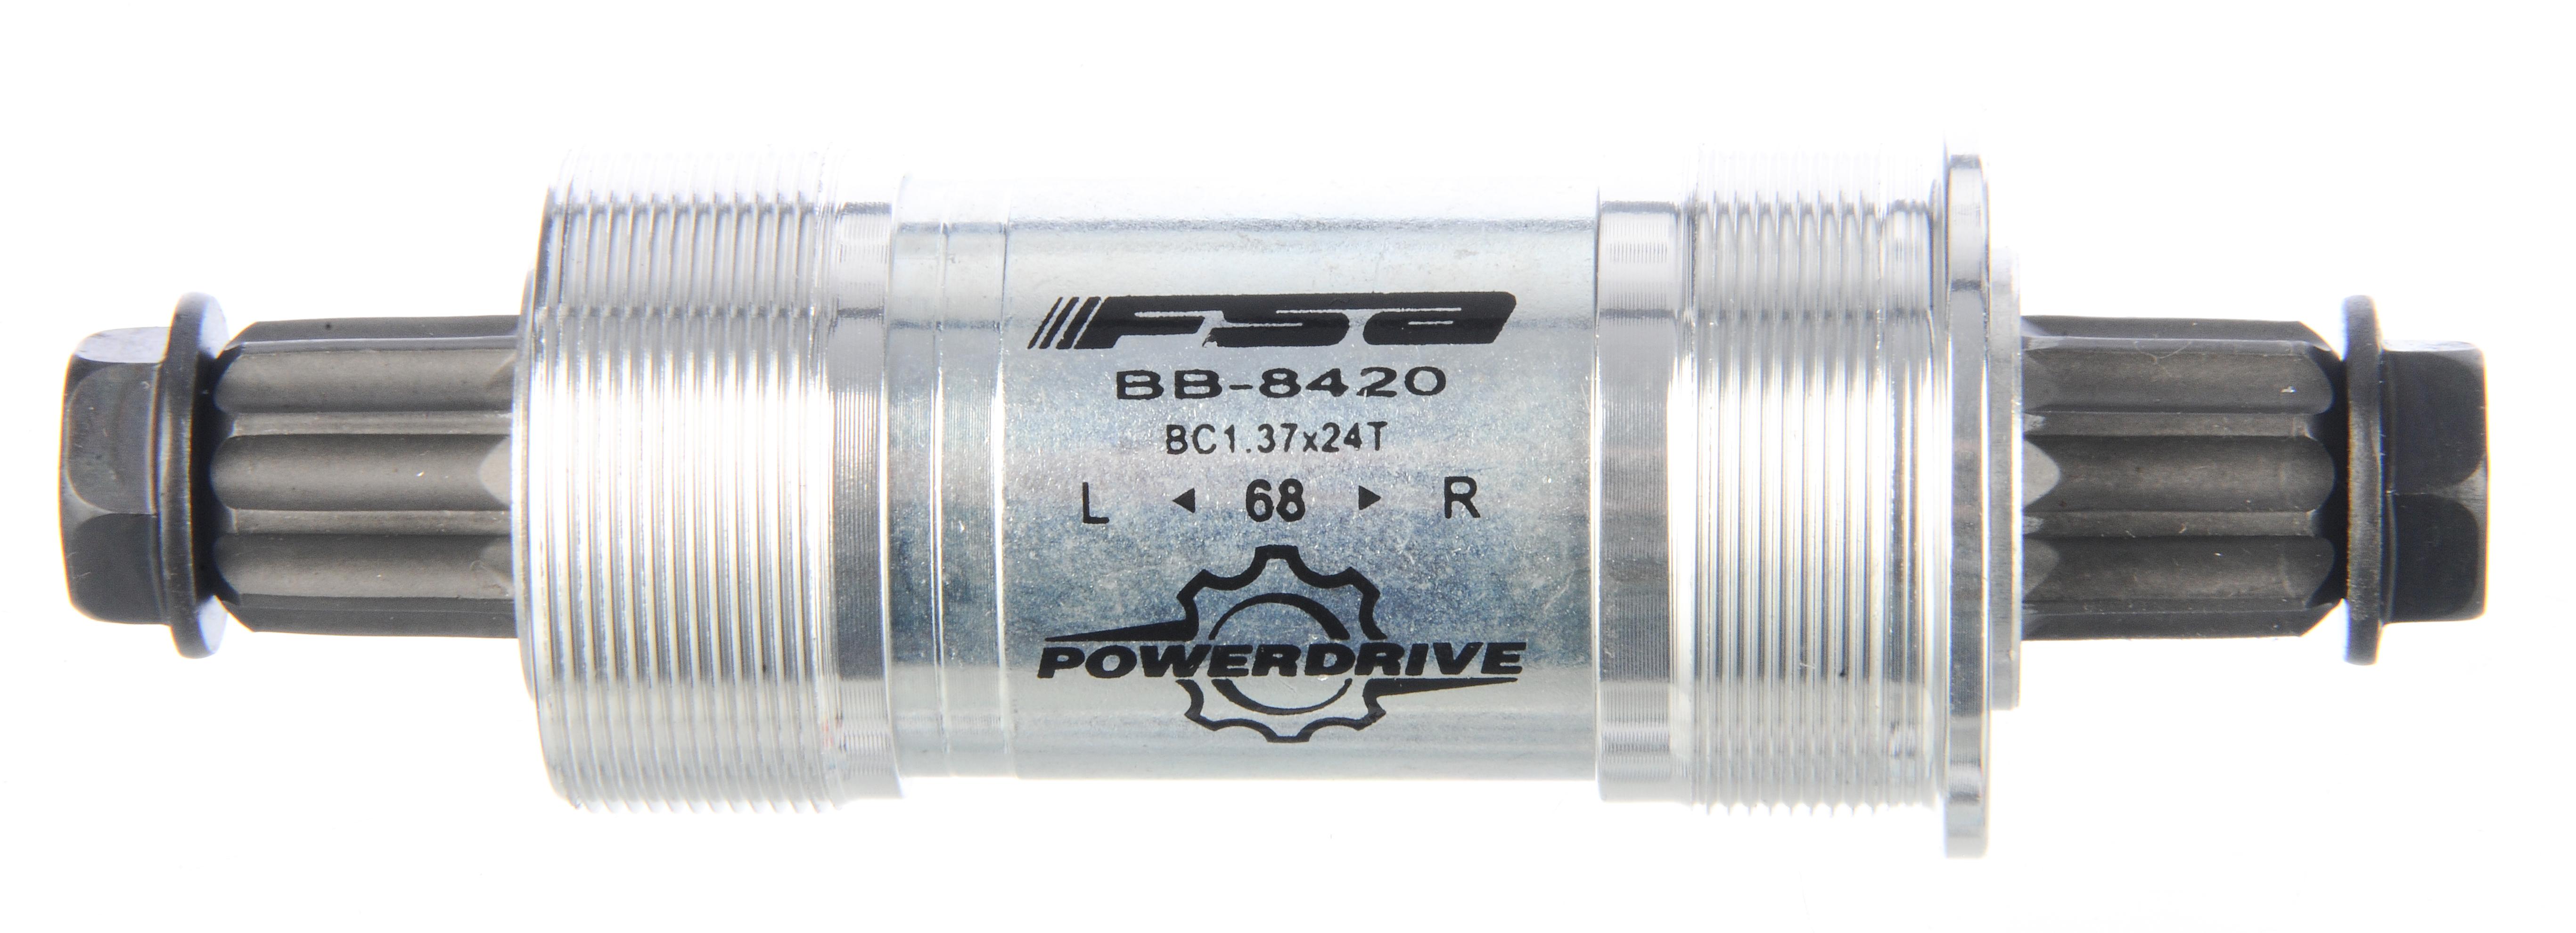 Fsa Power Drive Bottom Bracket (bb-8420) - Silver